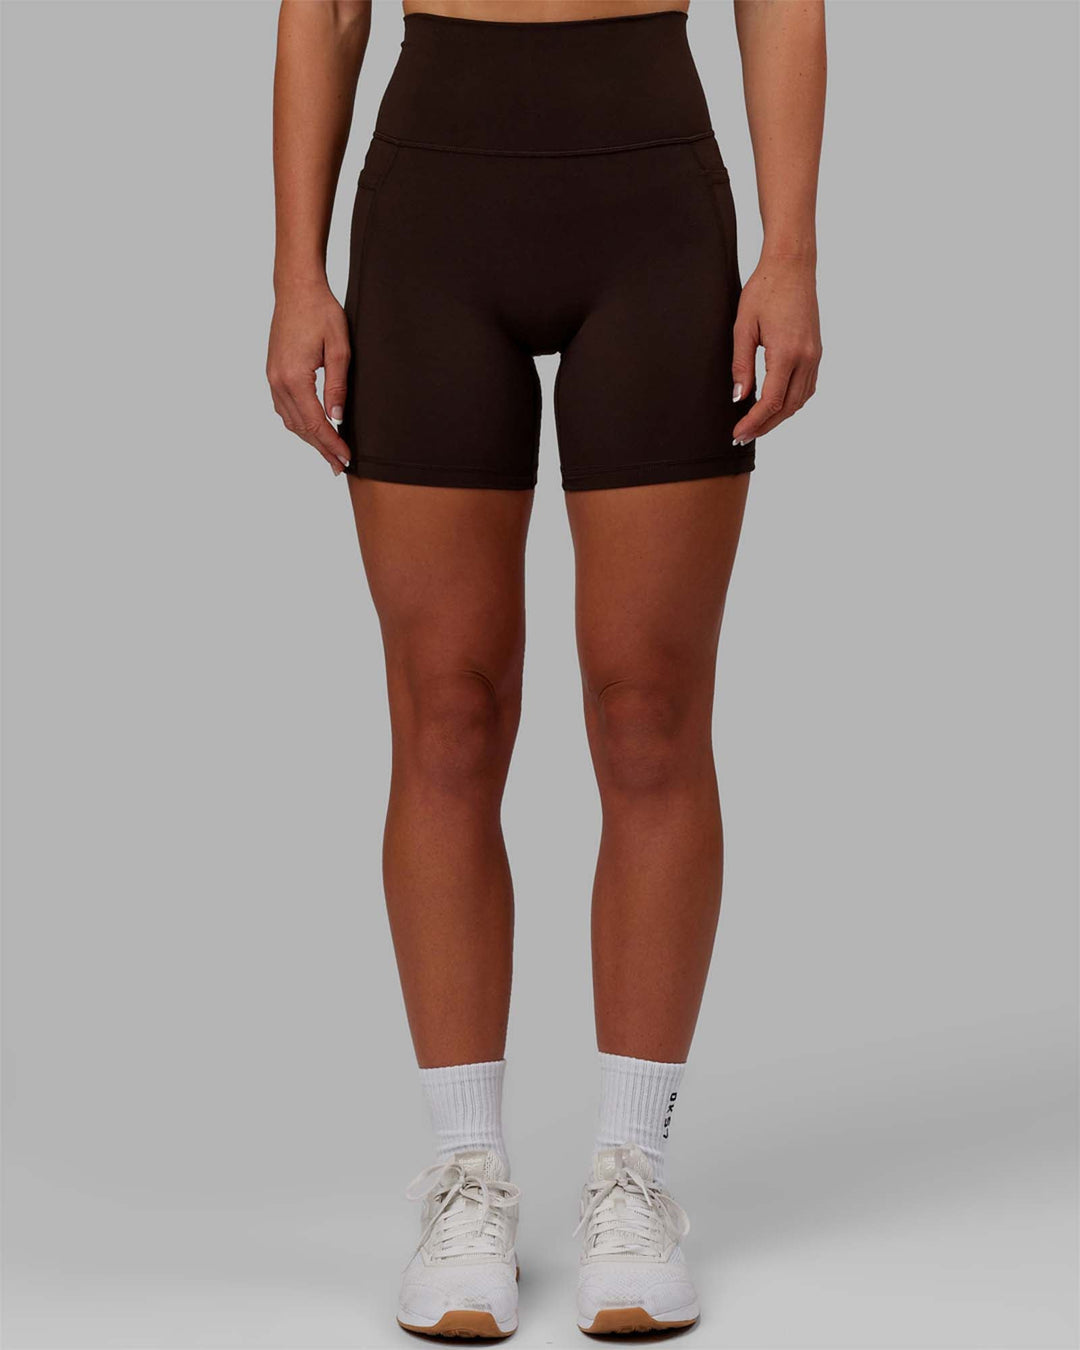 Woman wearing Fusion Mid-Length Shorts - Dark Chocolate